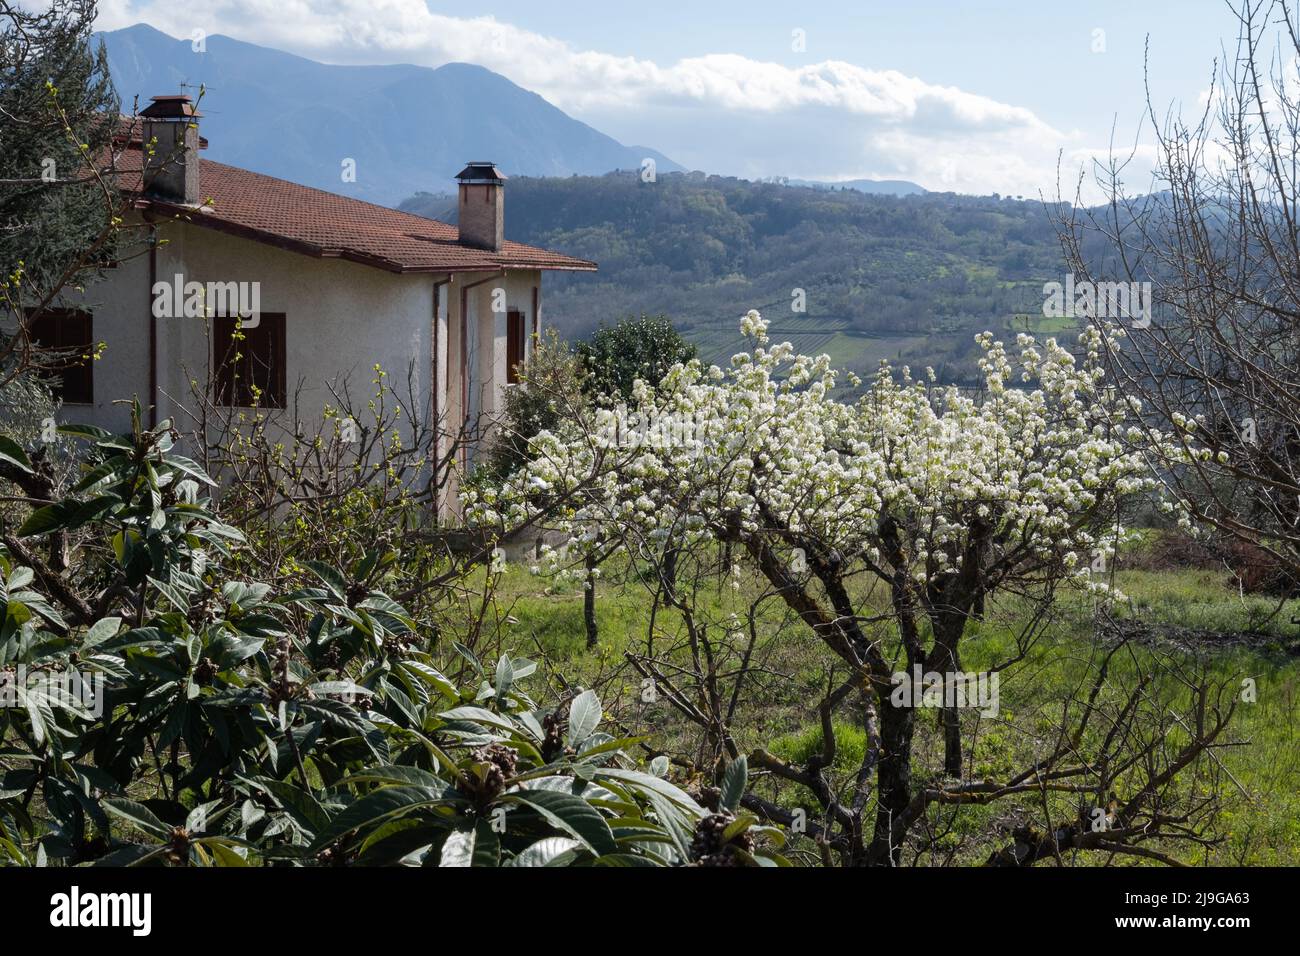 Flowering fruit tree in Taurasi, Italy Stock Photo